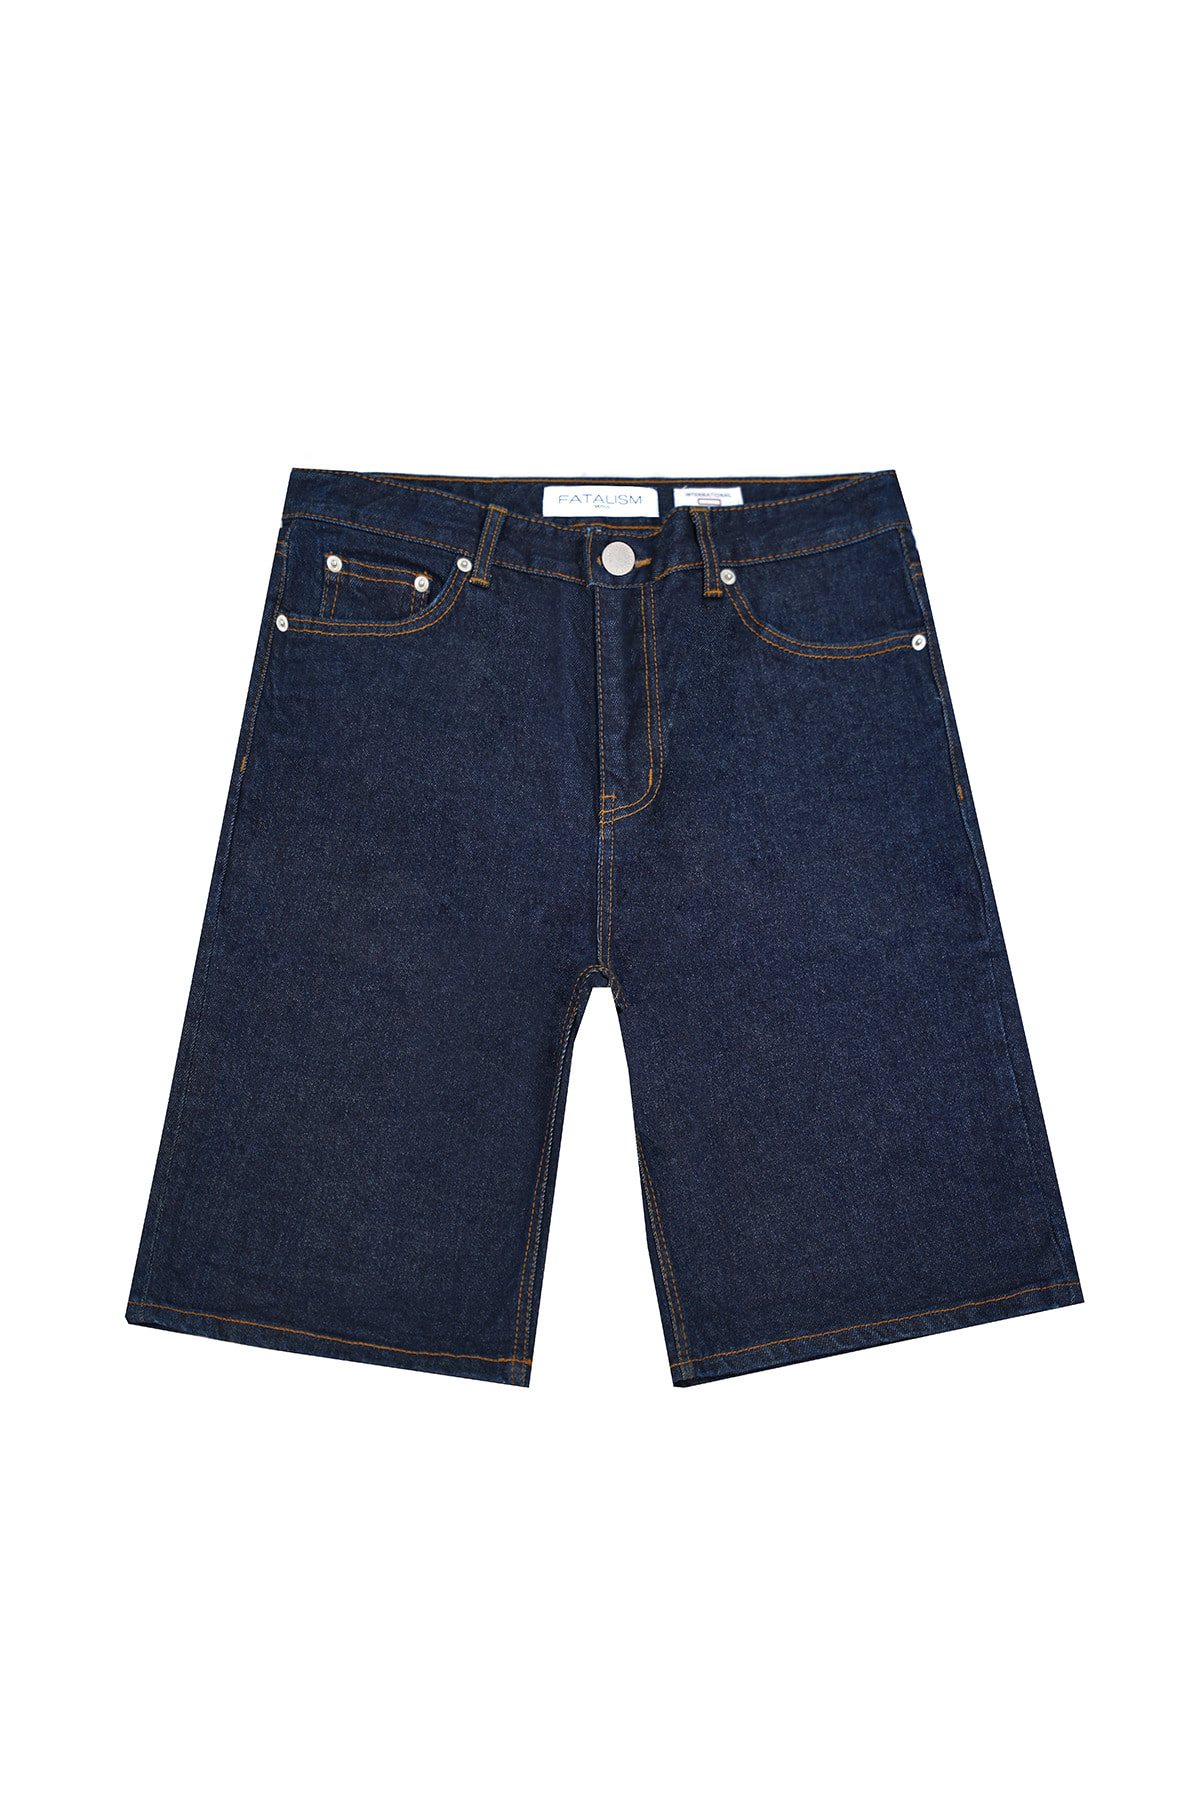 #0144 indigo standard short pants